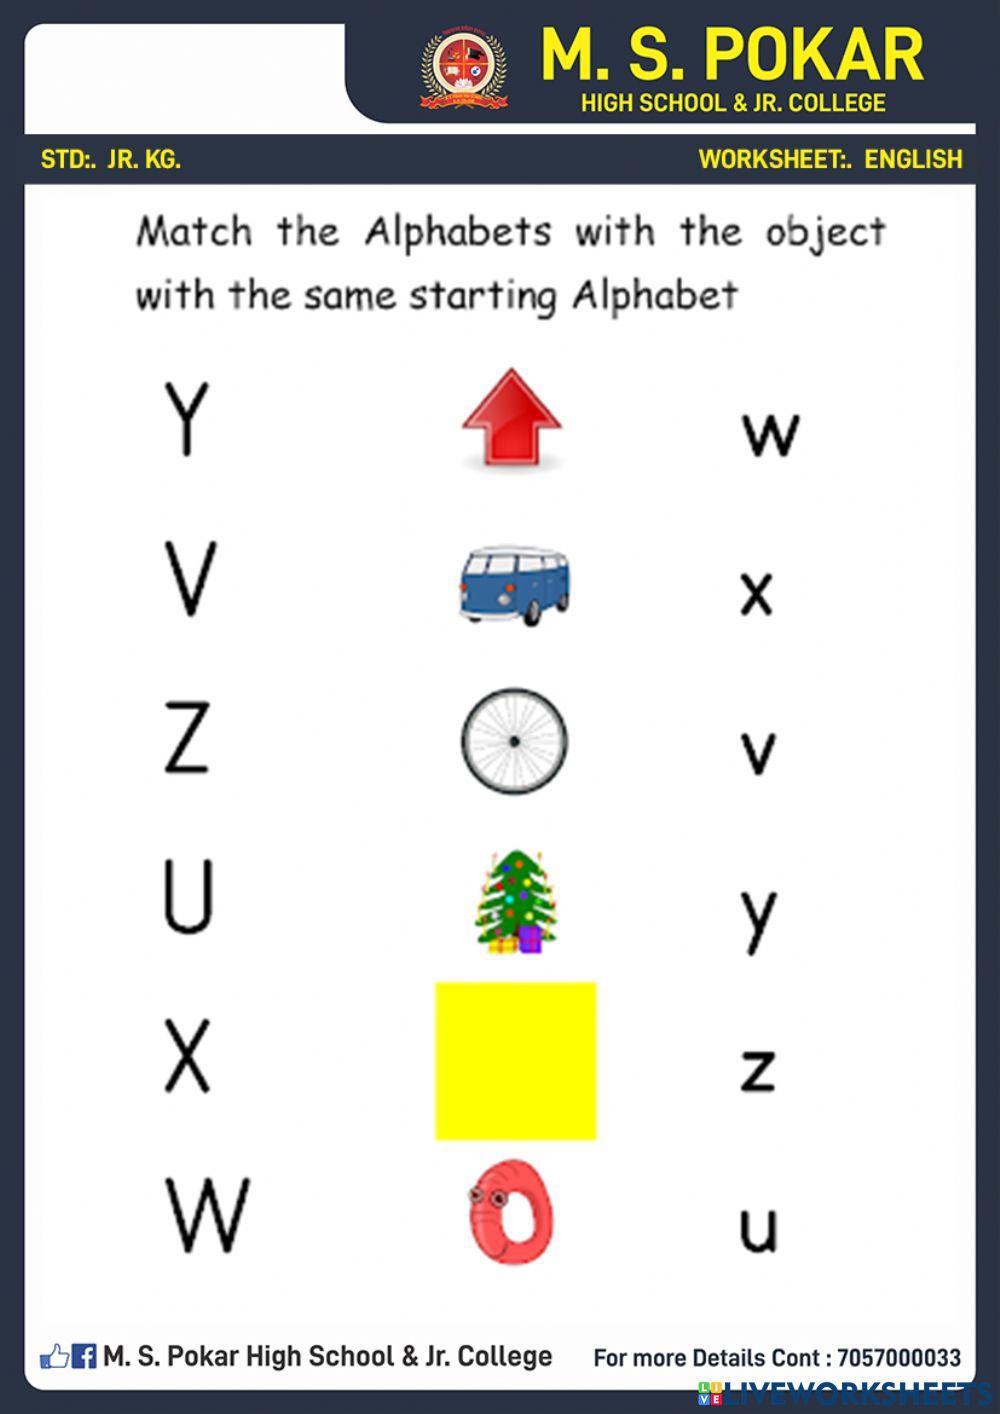 Match the alphabets